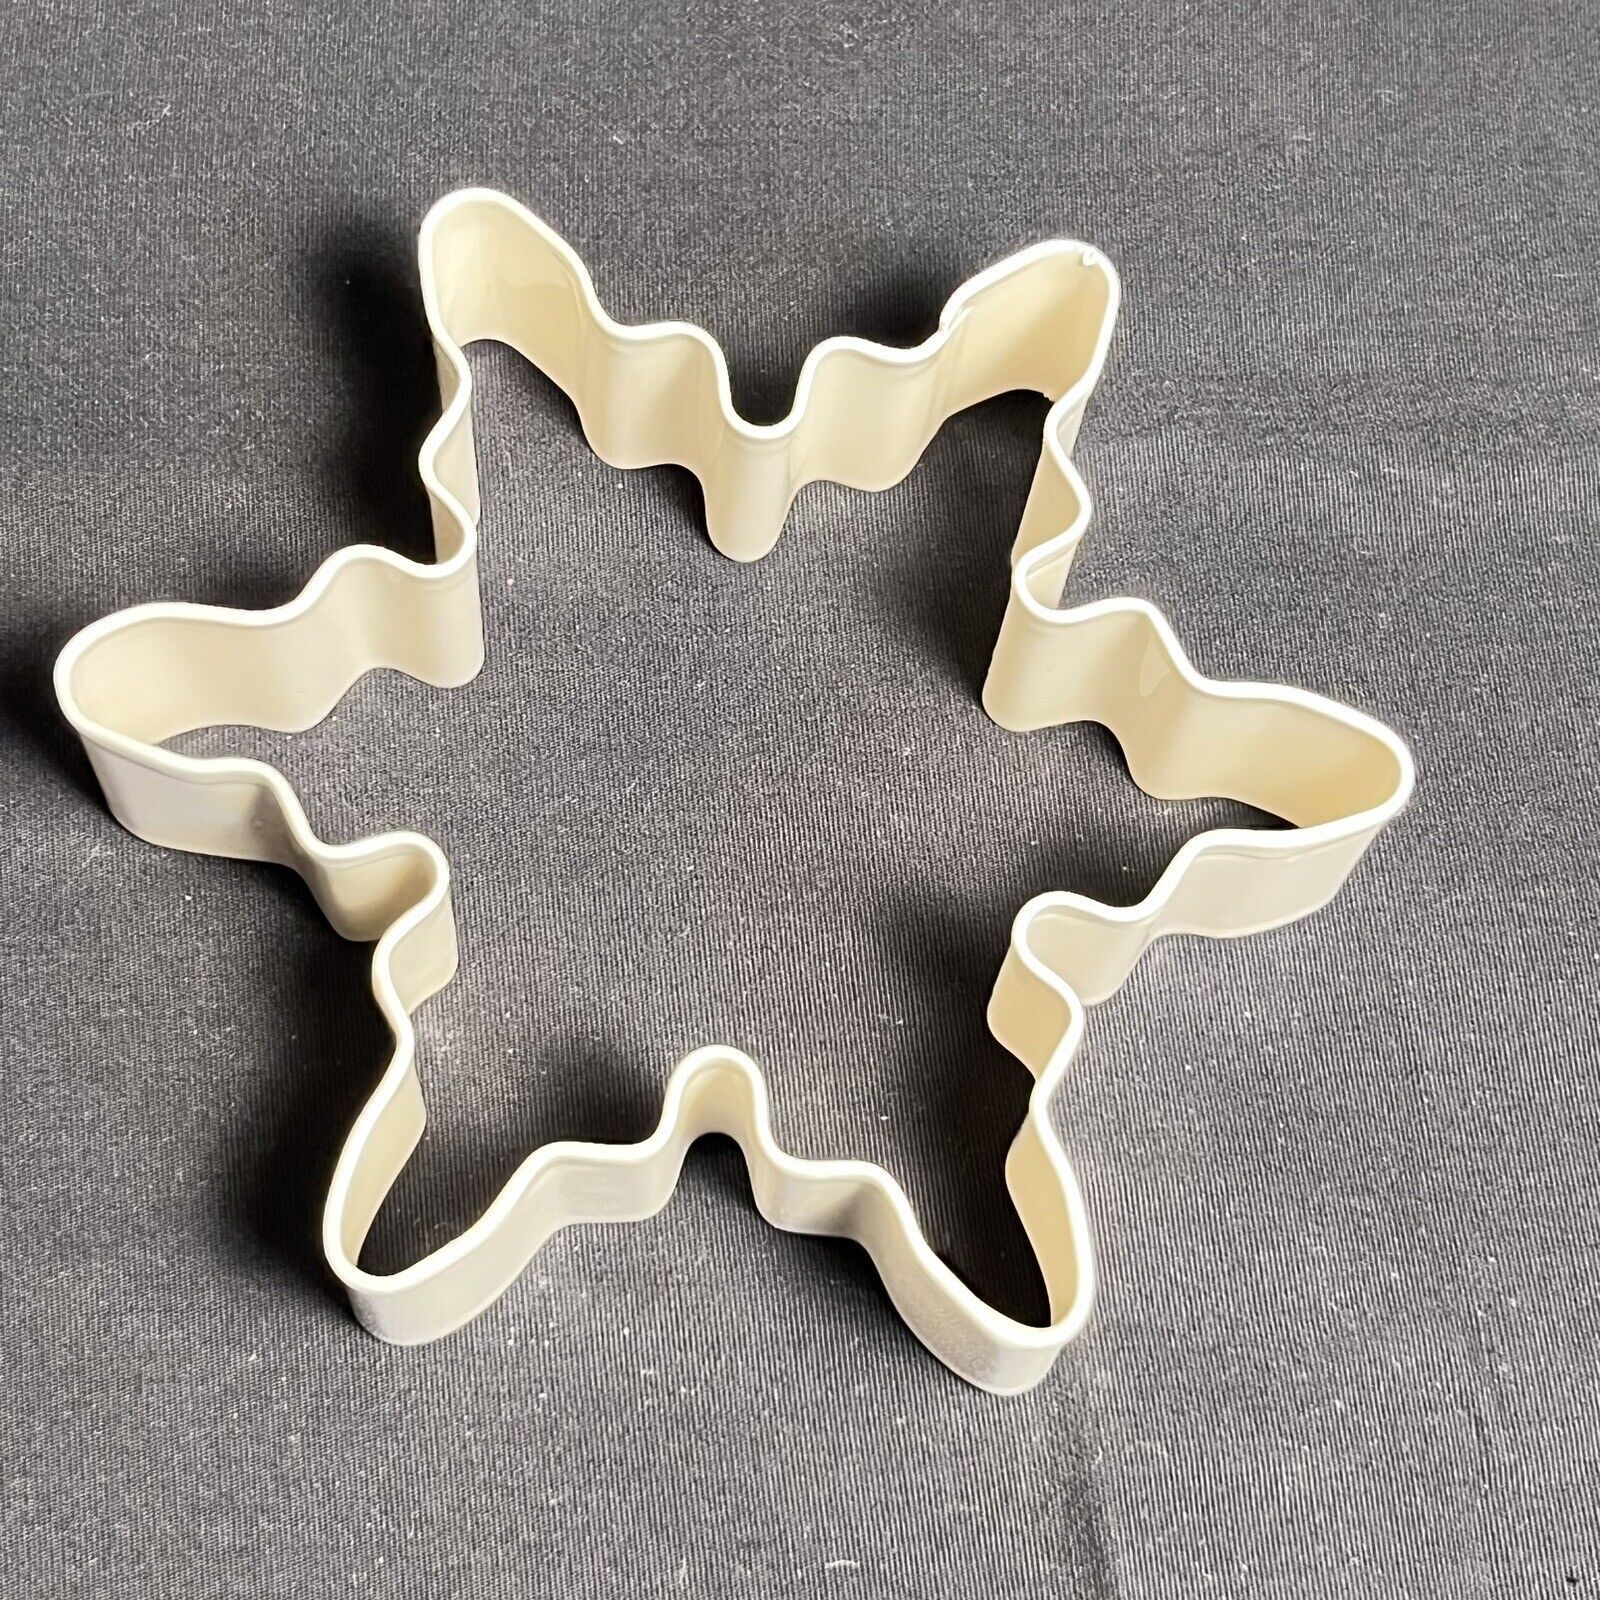 NWOT SNOWFLAKE Cookie Cutter Mold White Metal 1” Deep